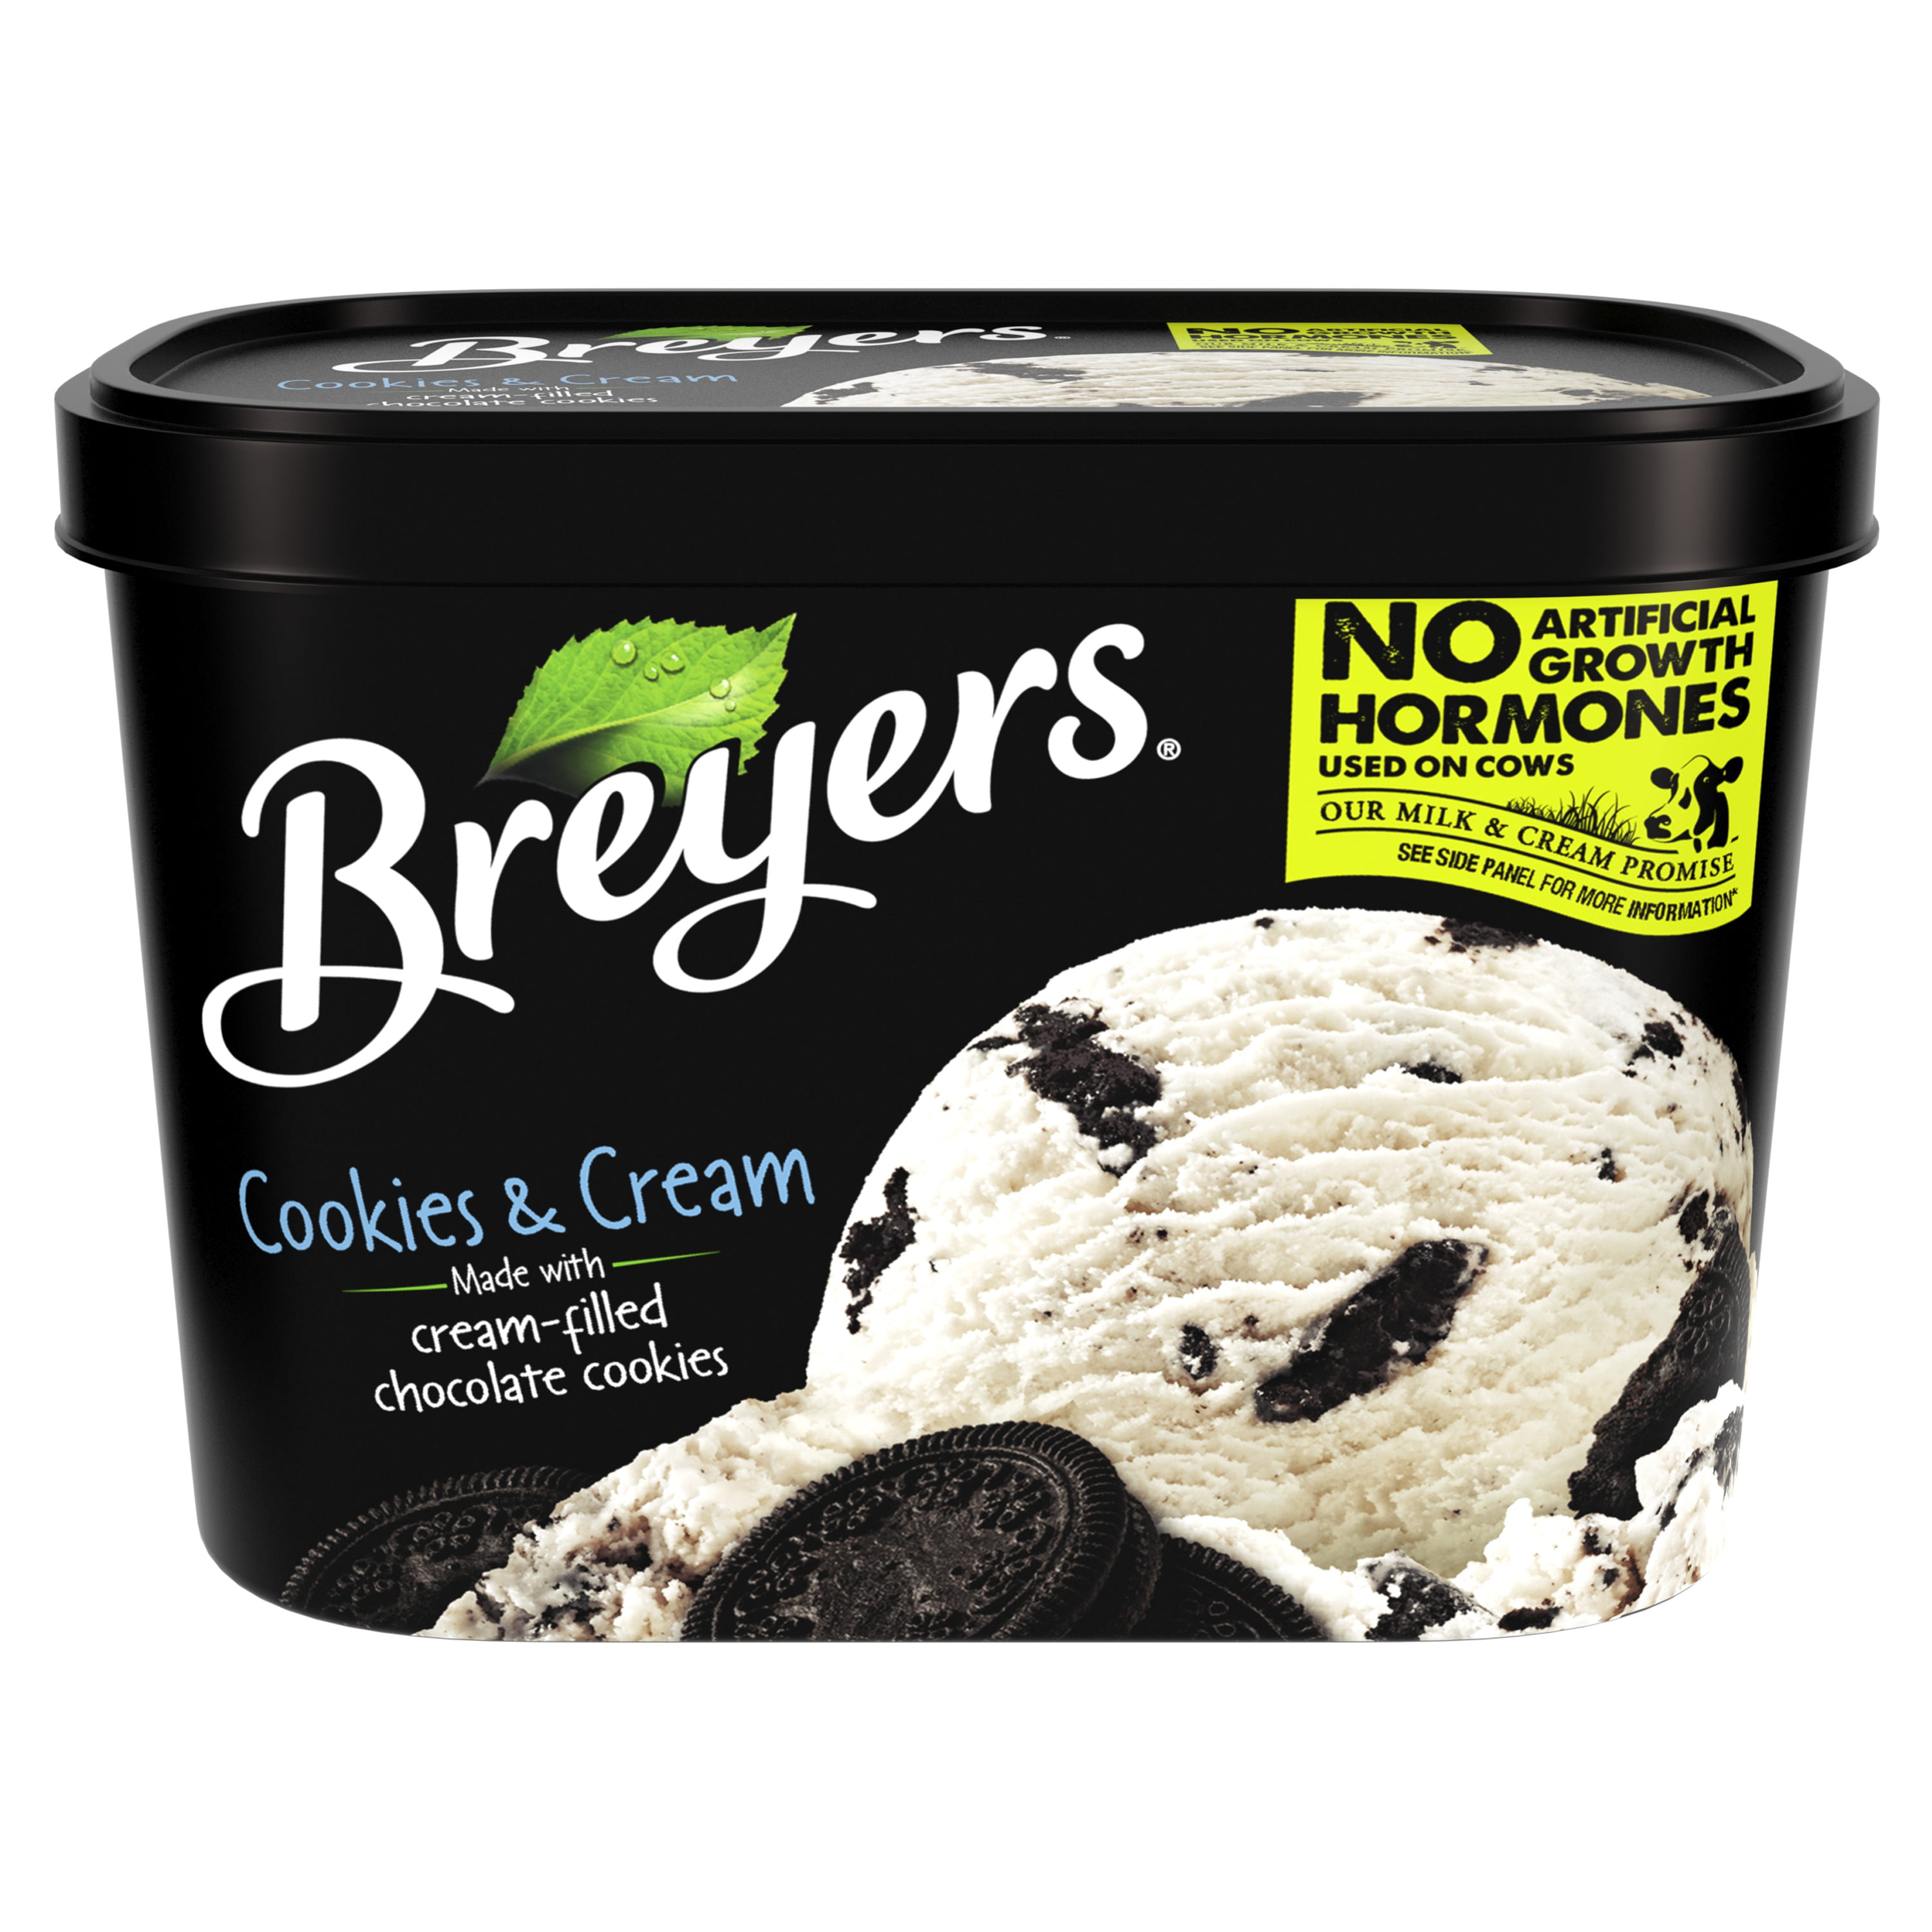 Breyers Original Cookies Cream Frozen Dairy Dessert 48 Oz Walmart Com Walmart Com